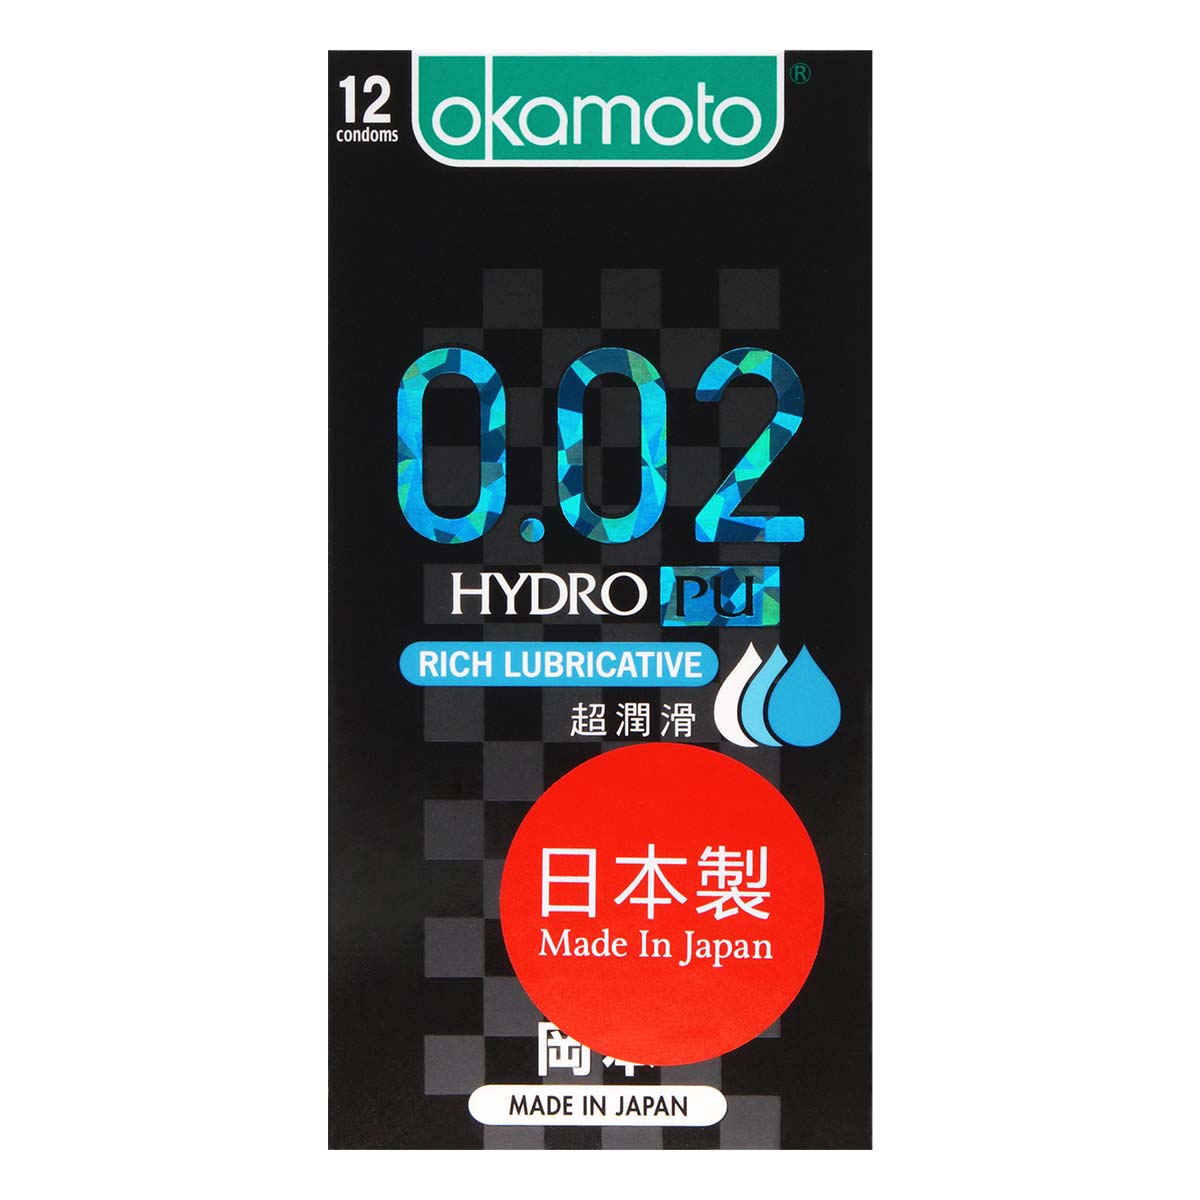 Okamoto 0.02 Rich Lubricative 12's Pack PU Condom-p_2